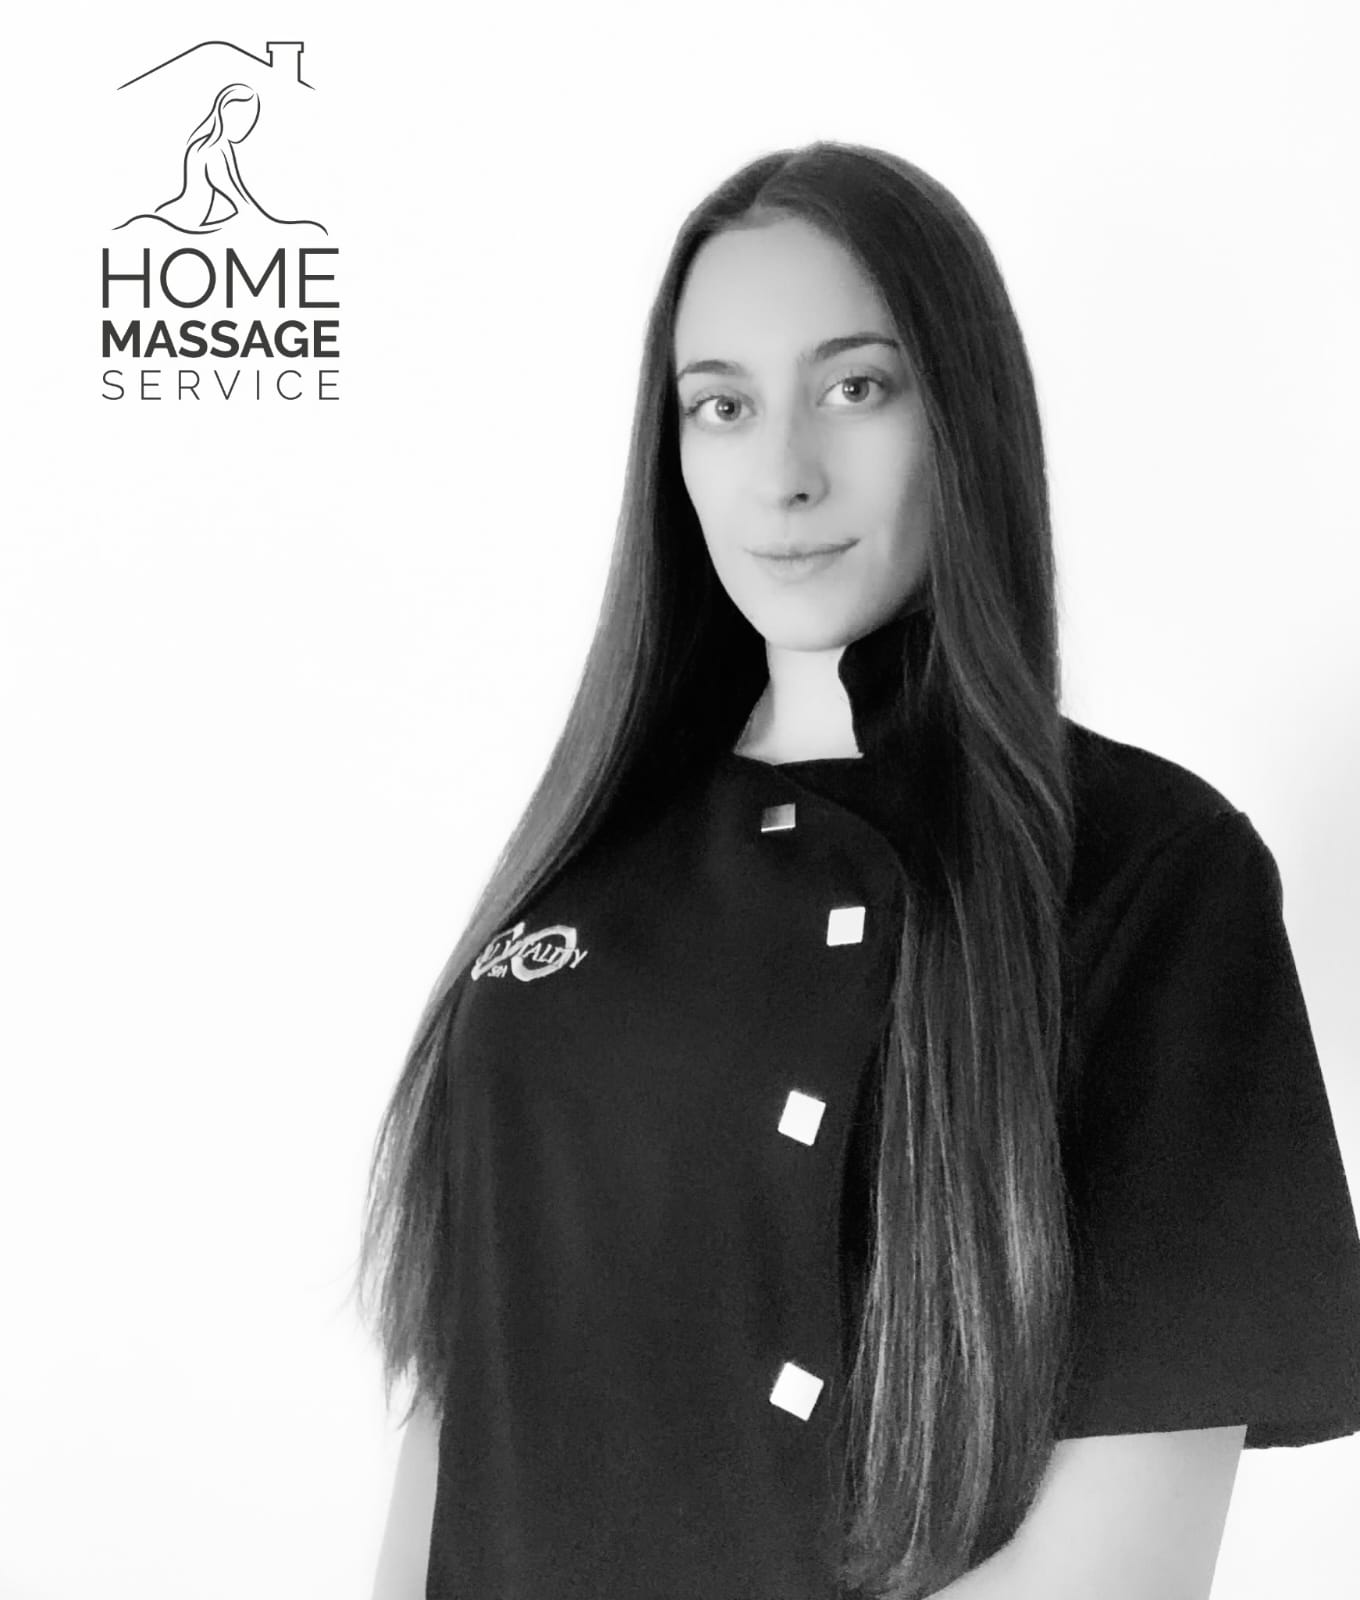 Home Massage Service